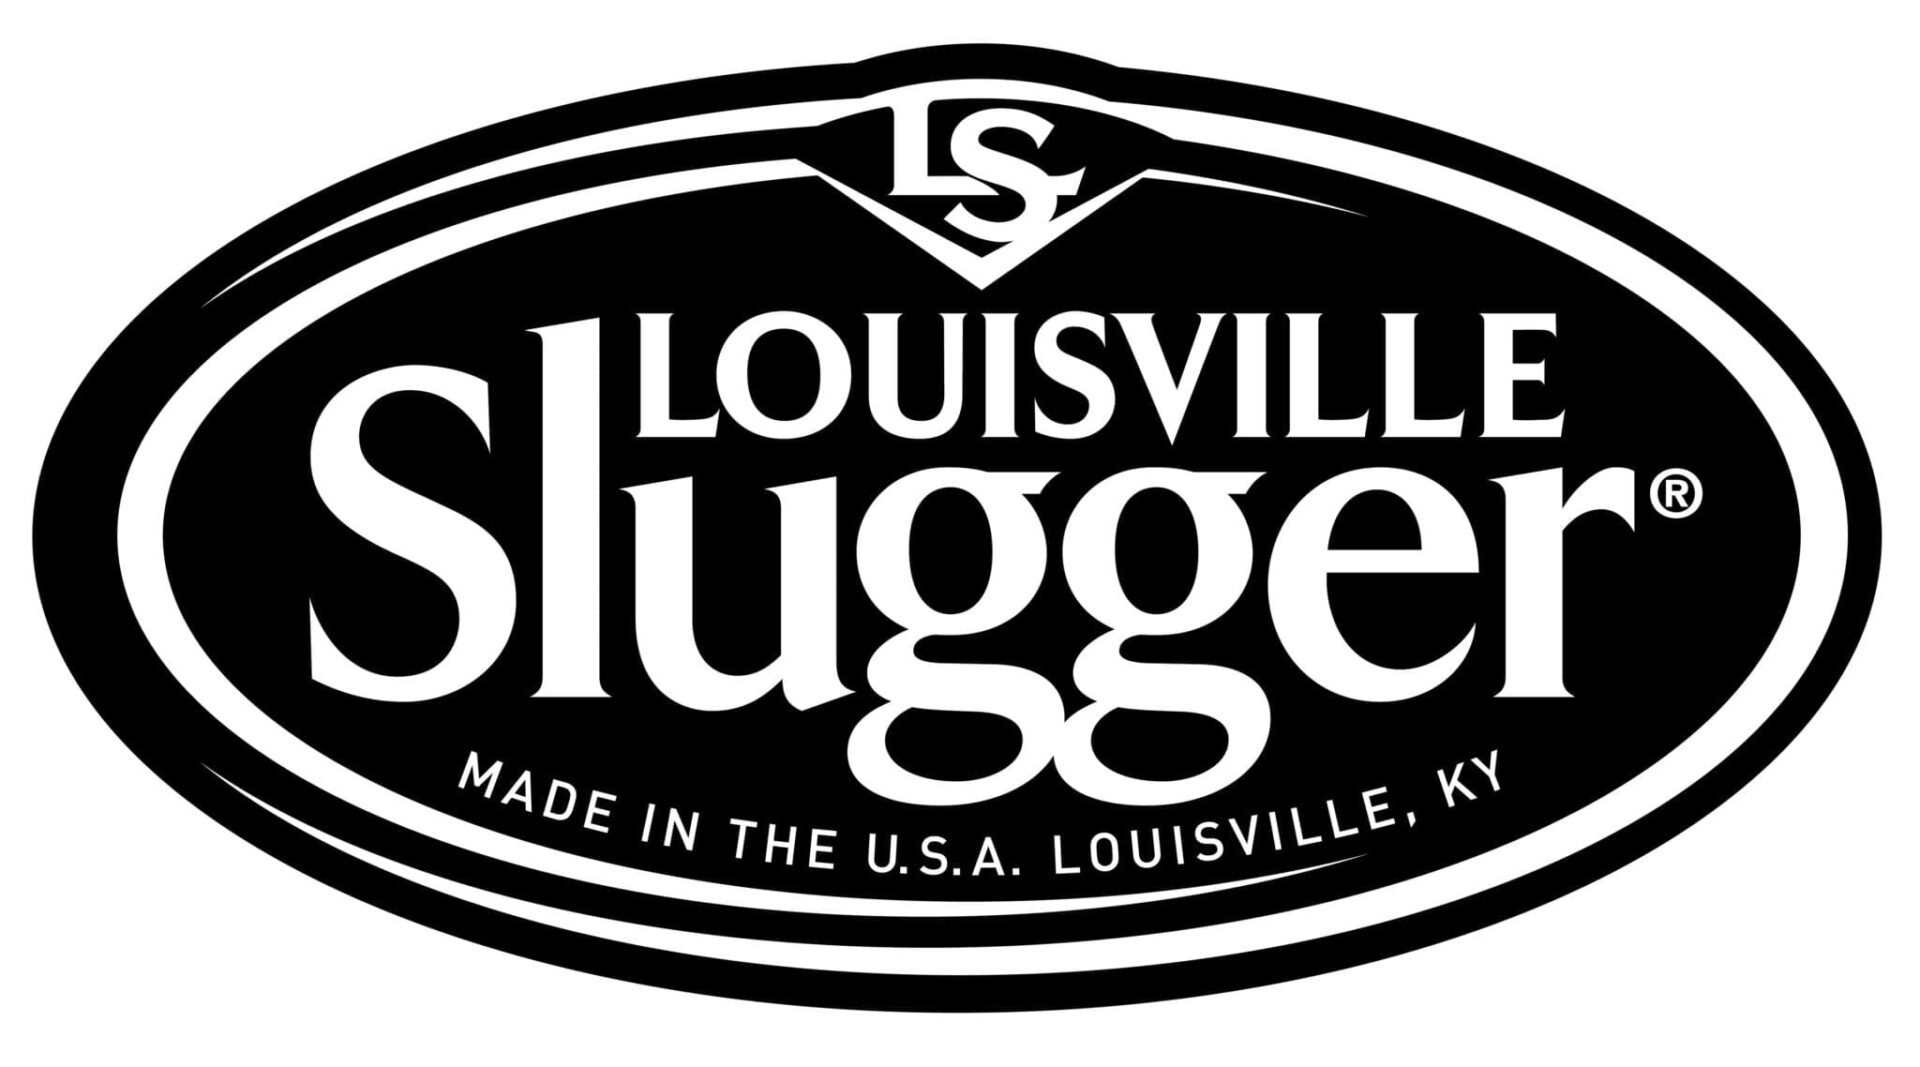 Louisville Slugger Logo in Black and White Color